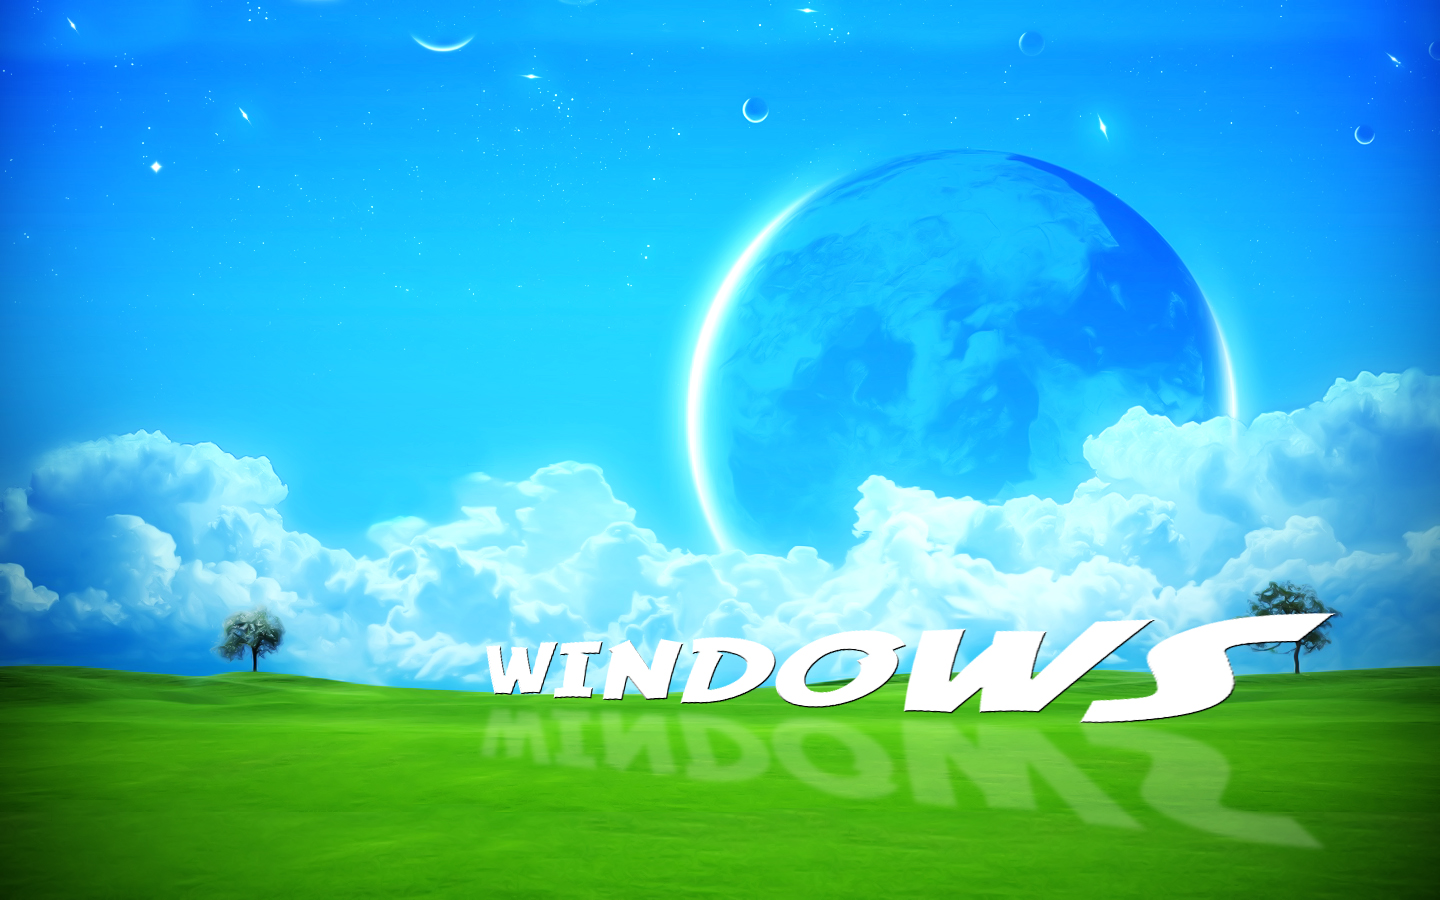 microsoft animated wallpapers windows 10